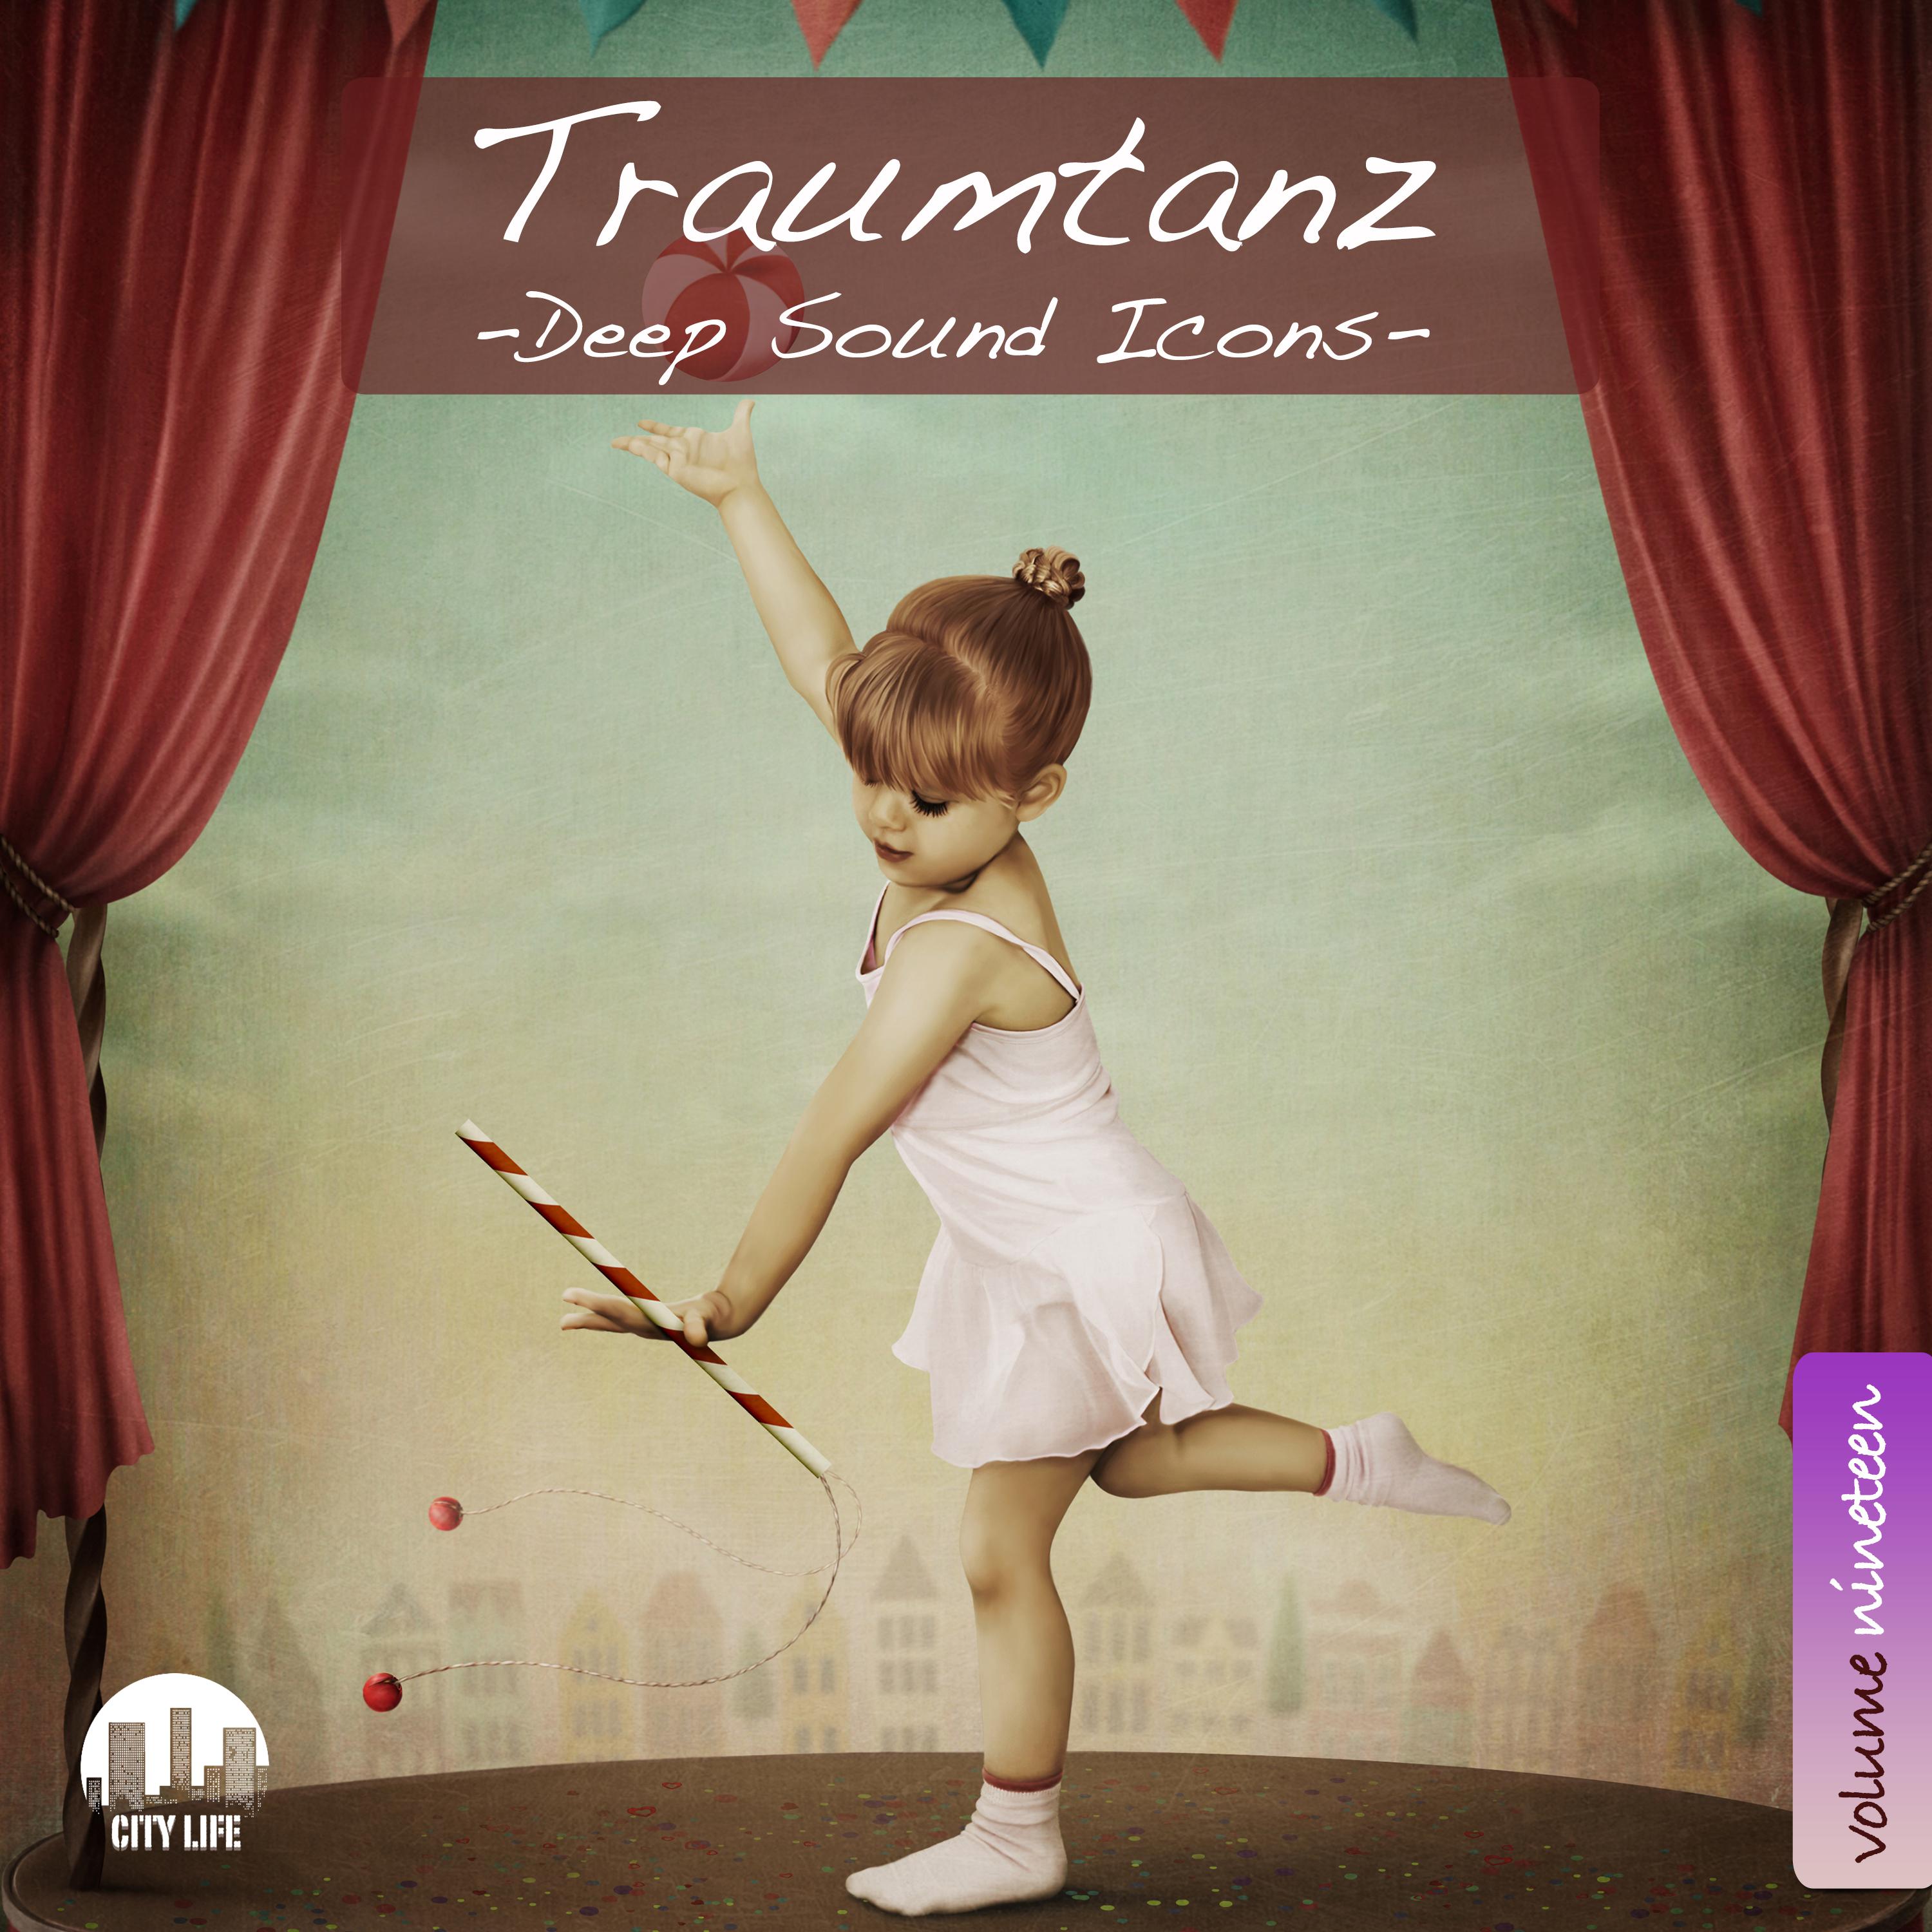 Traumtanz, Vol. 19 - Deep Sound Icons